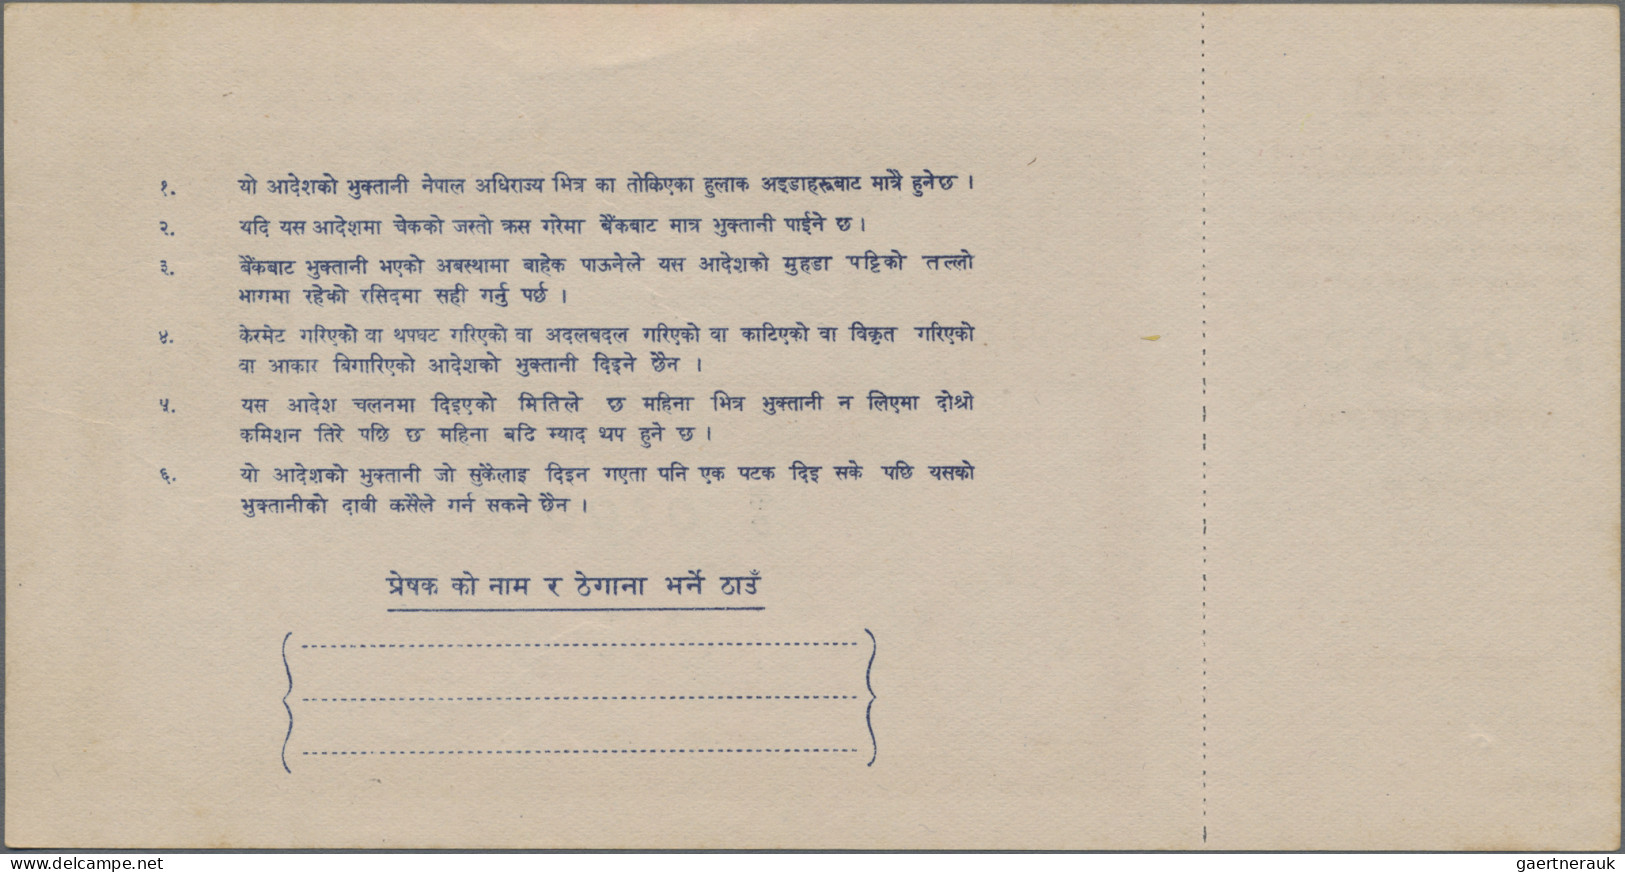 Nepal - postal stationery: 1956 ca. - POSTAL ORDERS 'King Mahendra' complete set